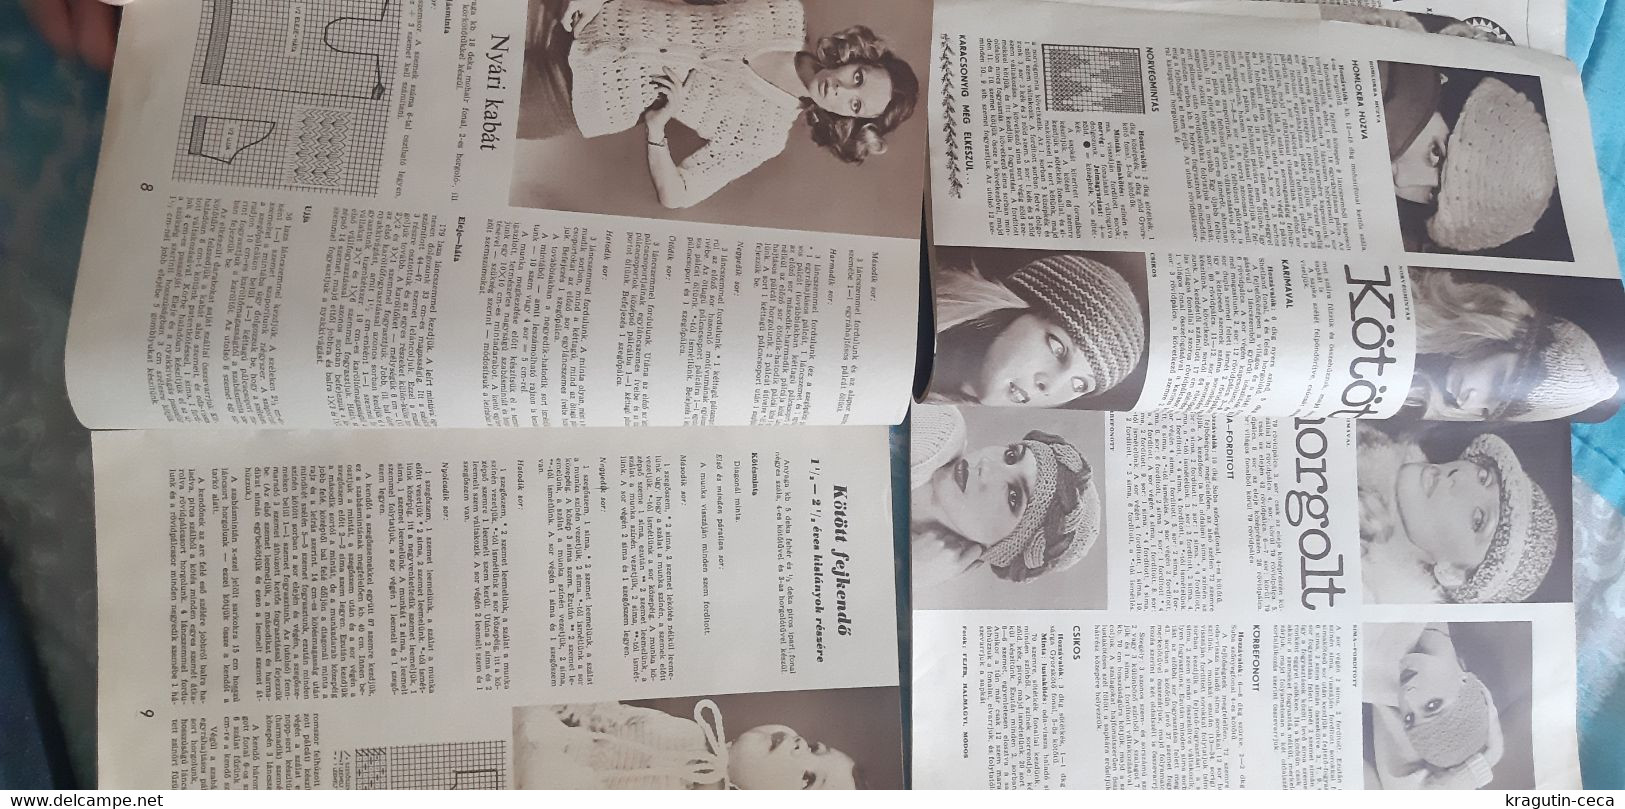 1977 Fürge Ujjak HUNGARY VINTAGE WOMAN FASHION handicrafts crochet LOT MAGAZINE NEWSPAPERS CHILDREN KNITTING WOOLWORK